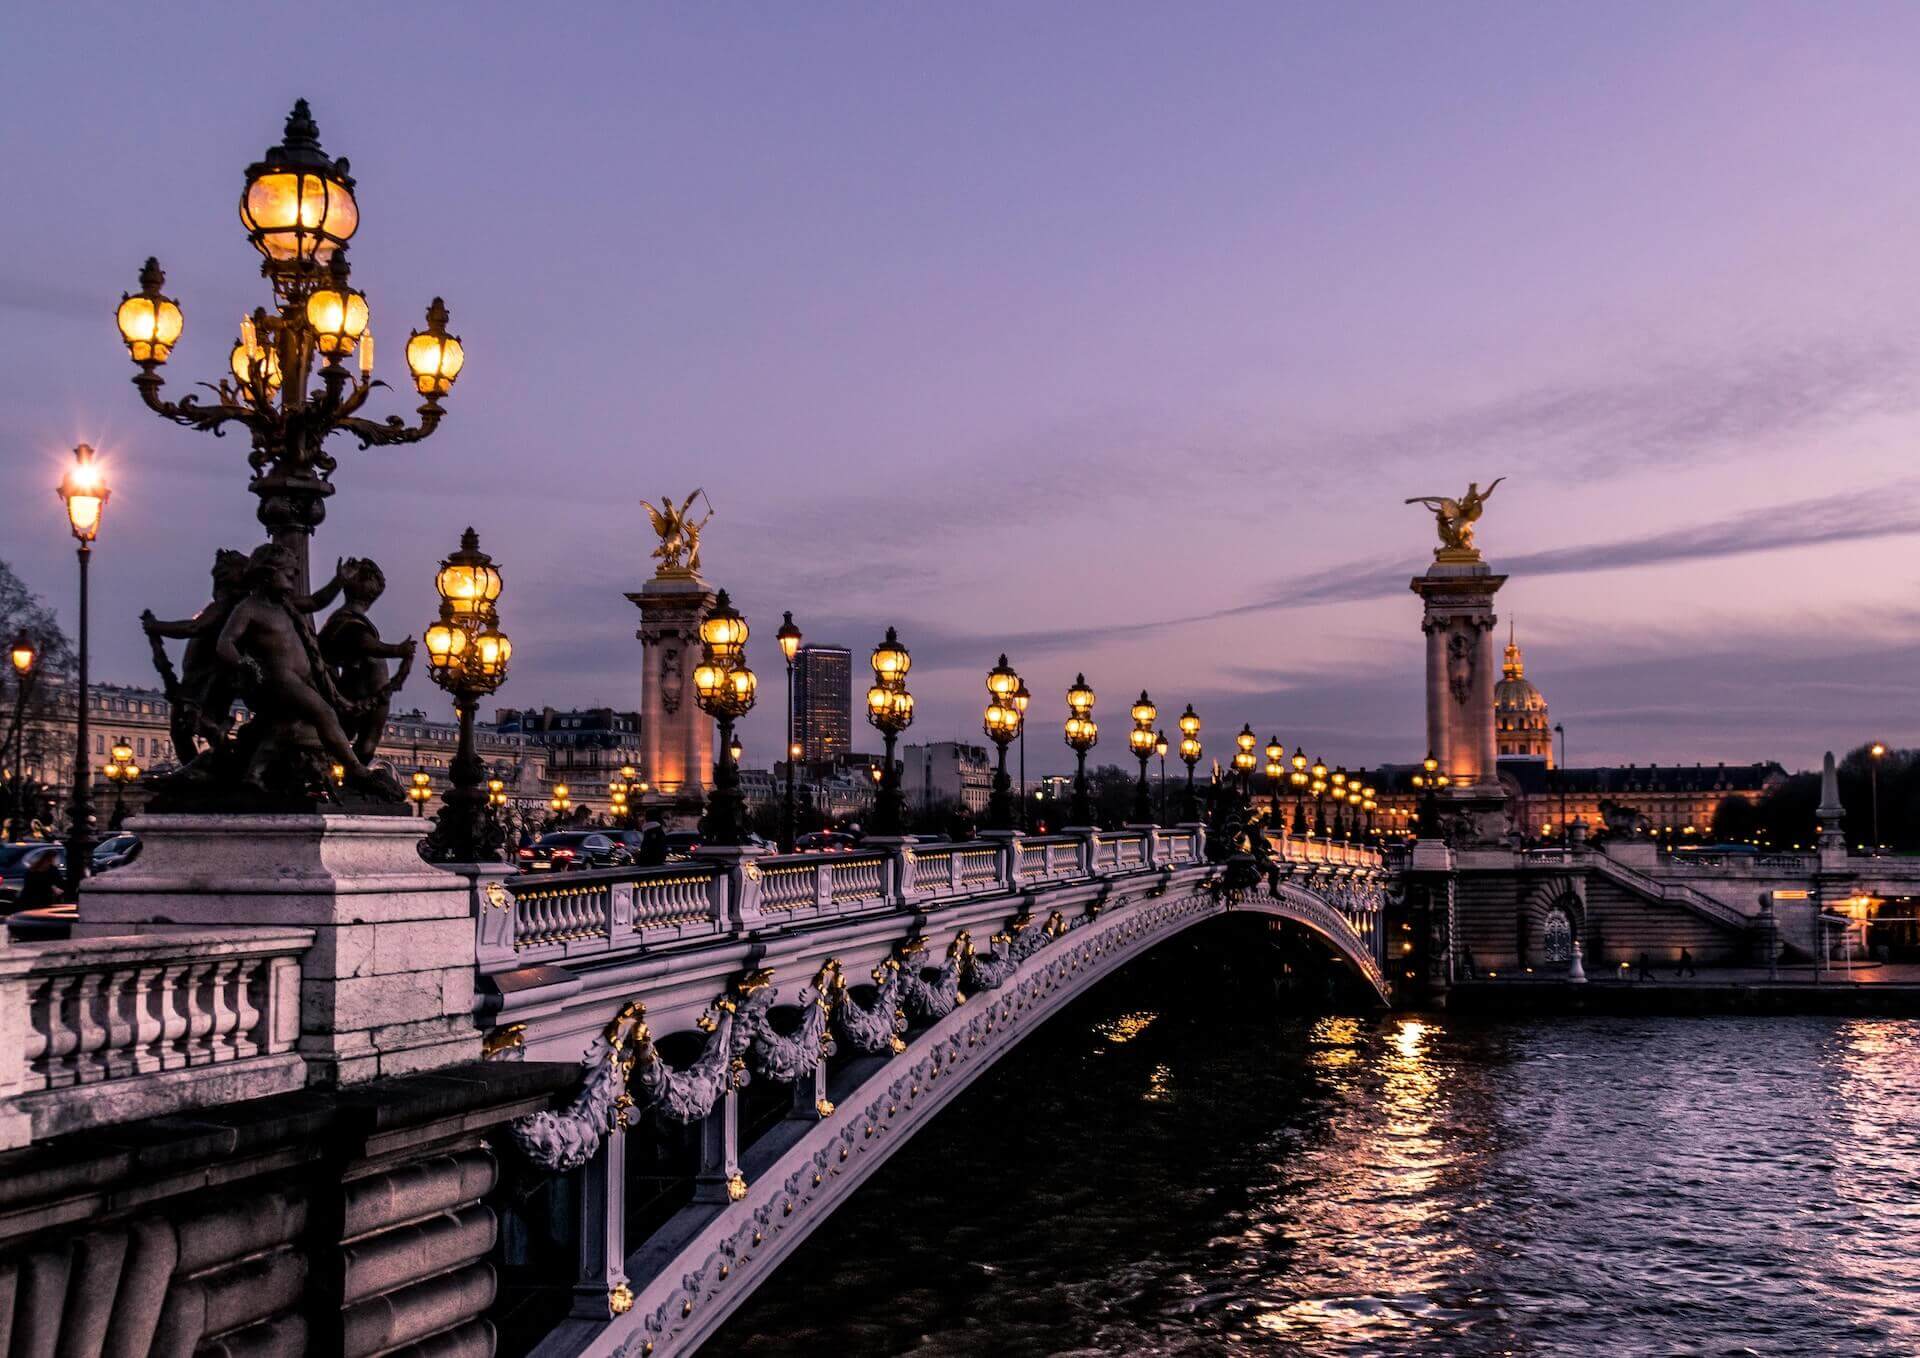 Bridge in Paris at nighttime